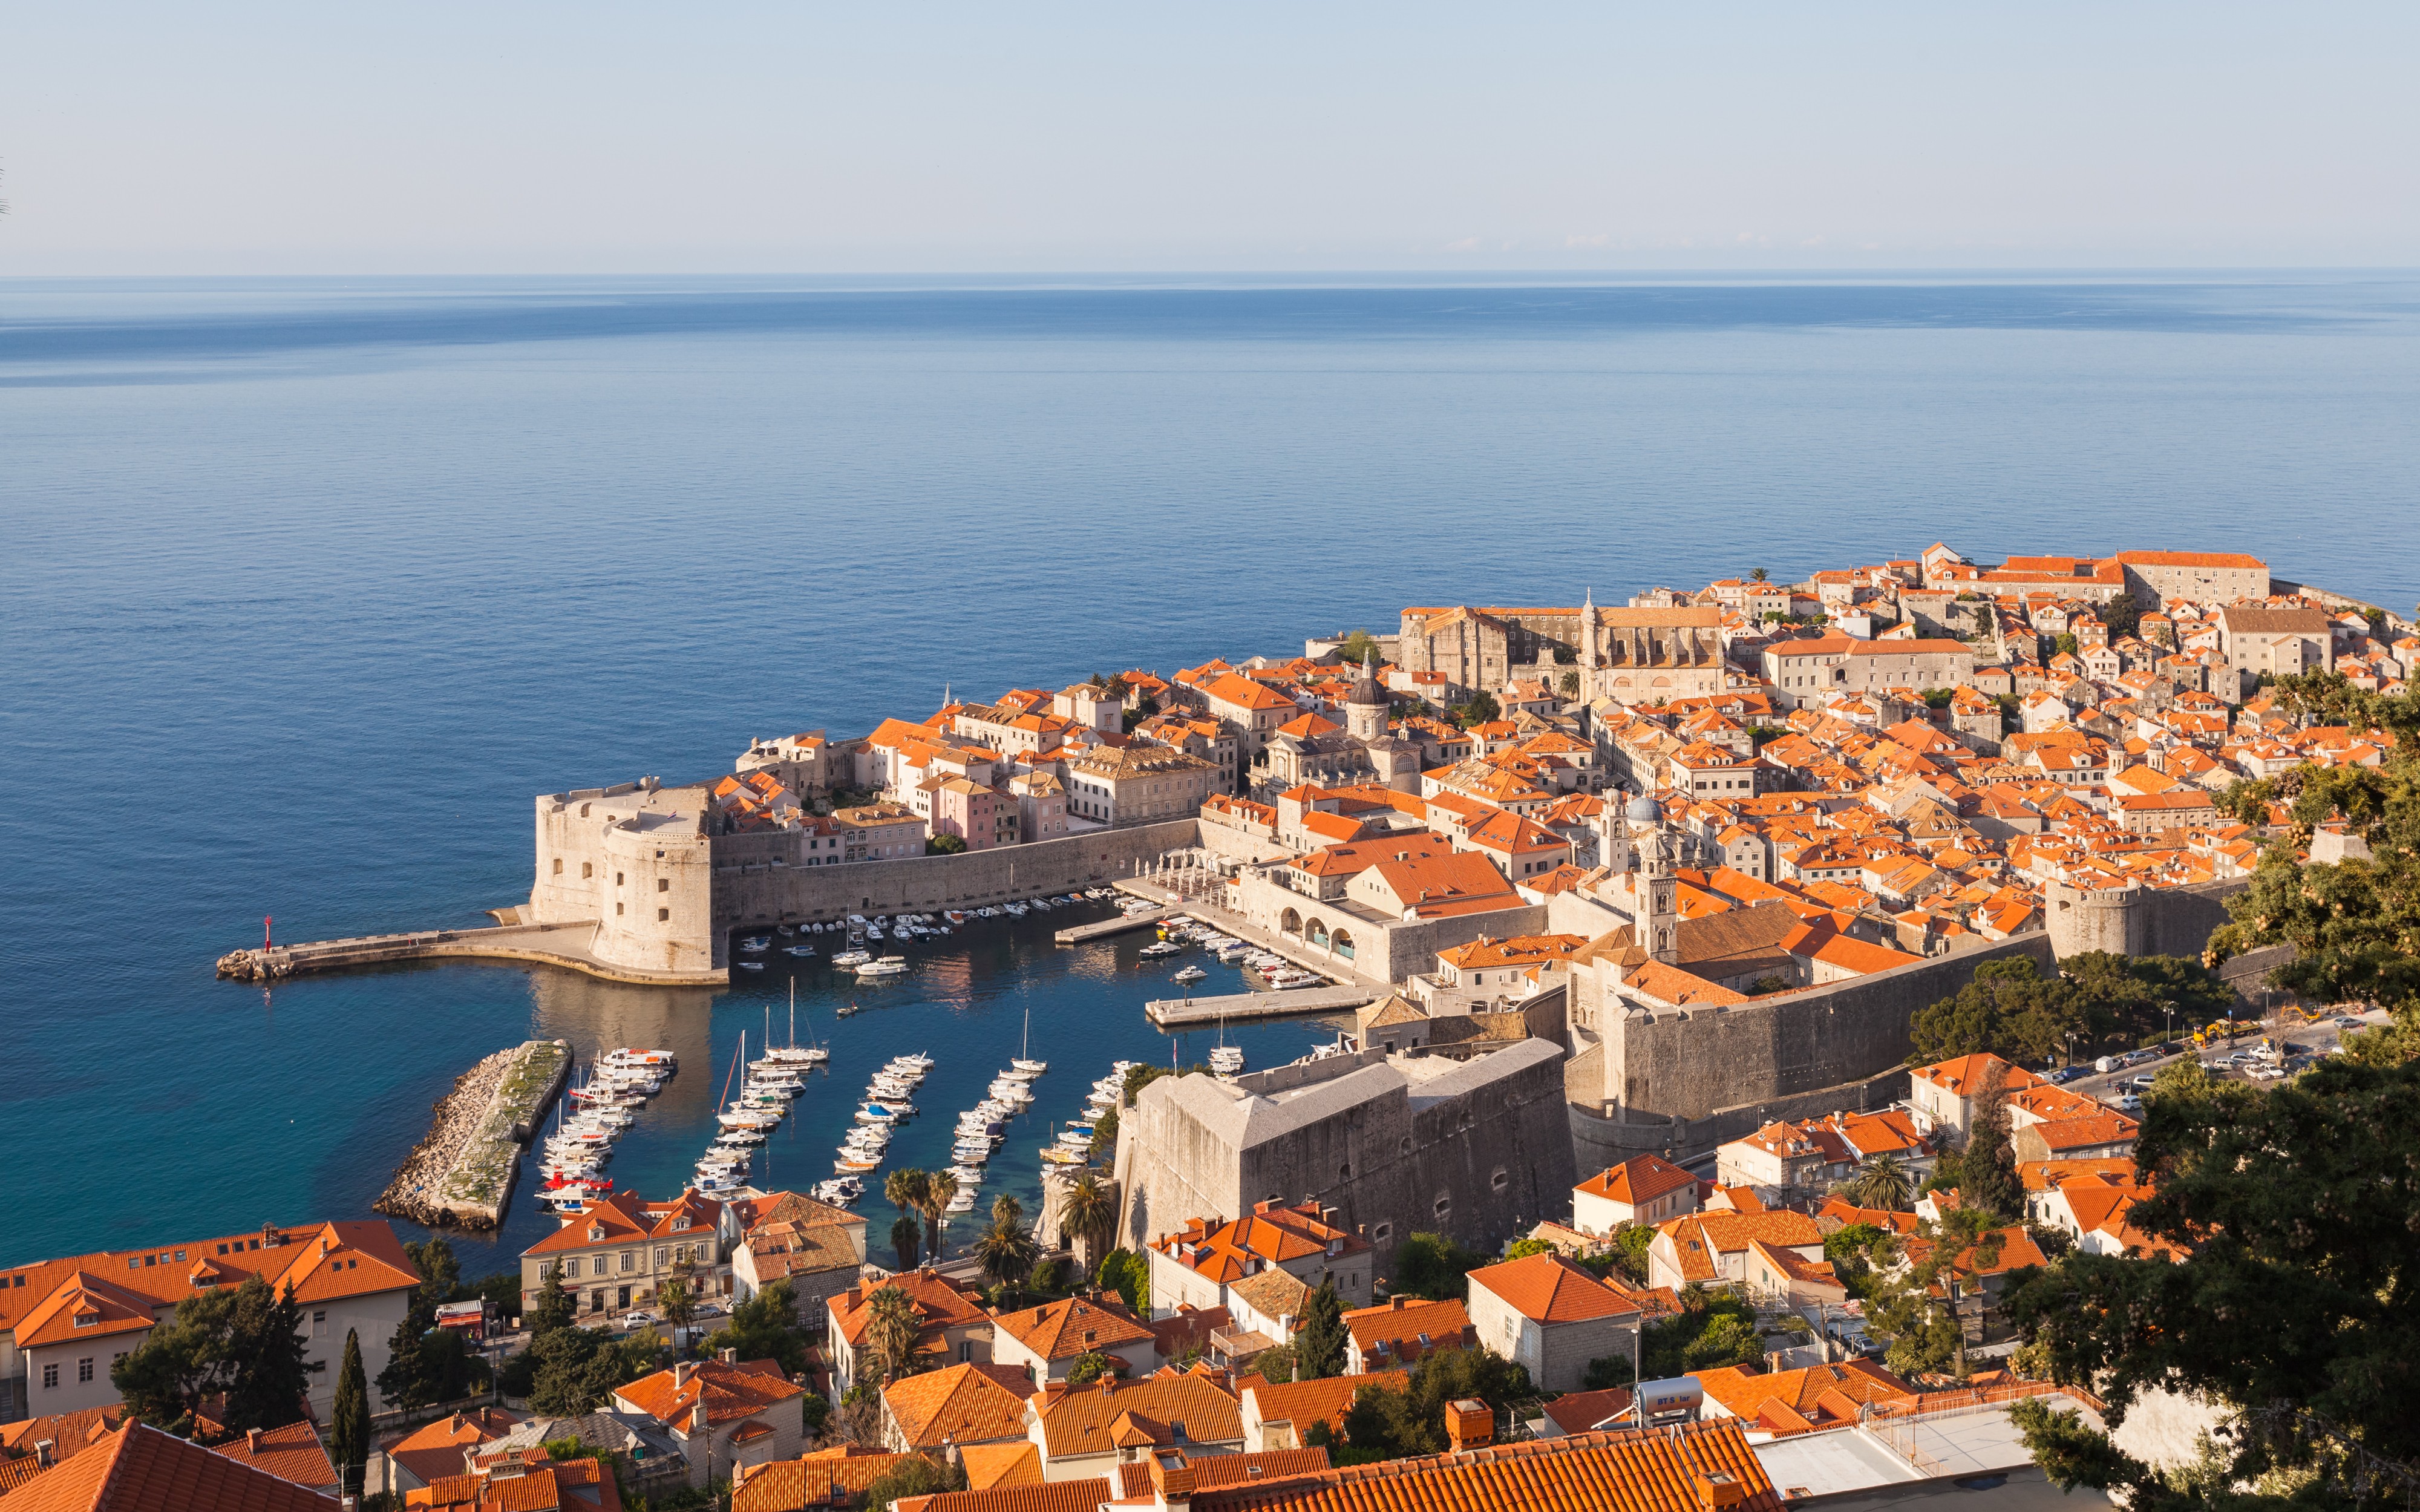 Casco viejo de Dubrovnik, Croacia, 2014-04-14, DD 04